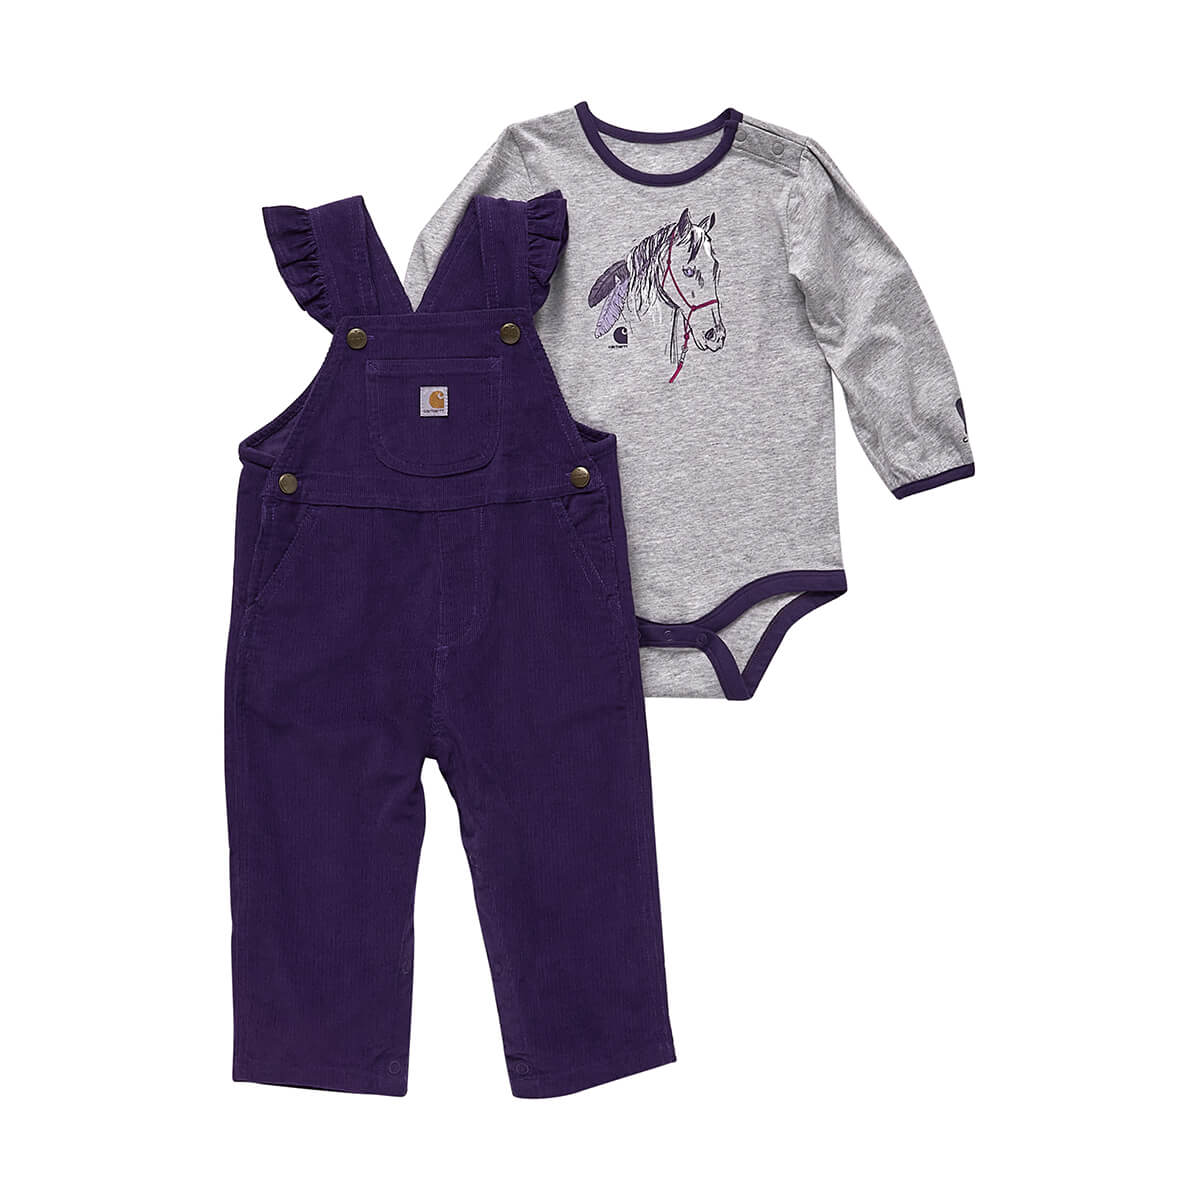 Carhartt Infant's Long Sleeve Bodysuit & Corduroy Overall 2PC Set - Crown Jewel